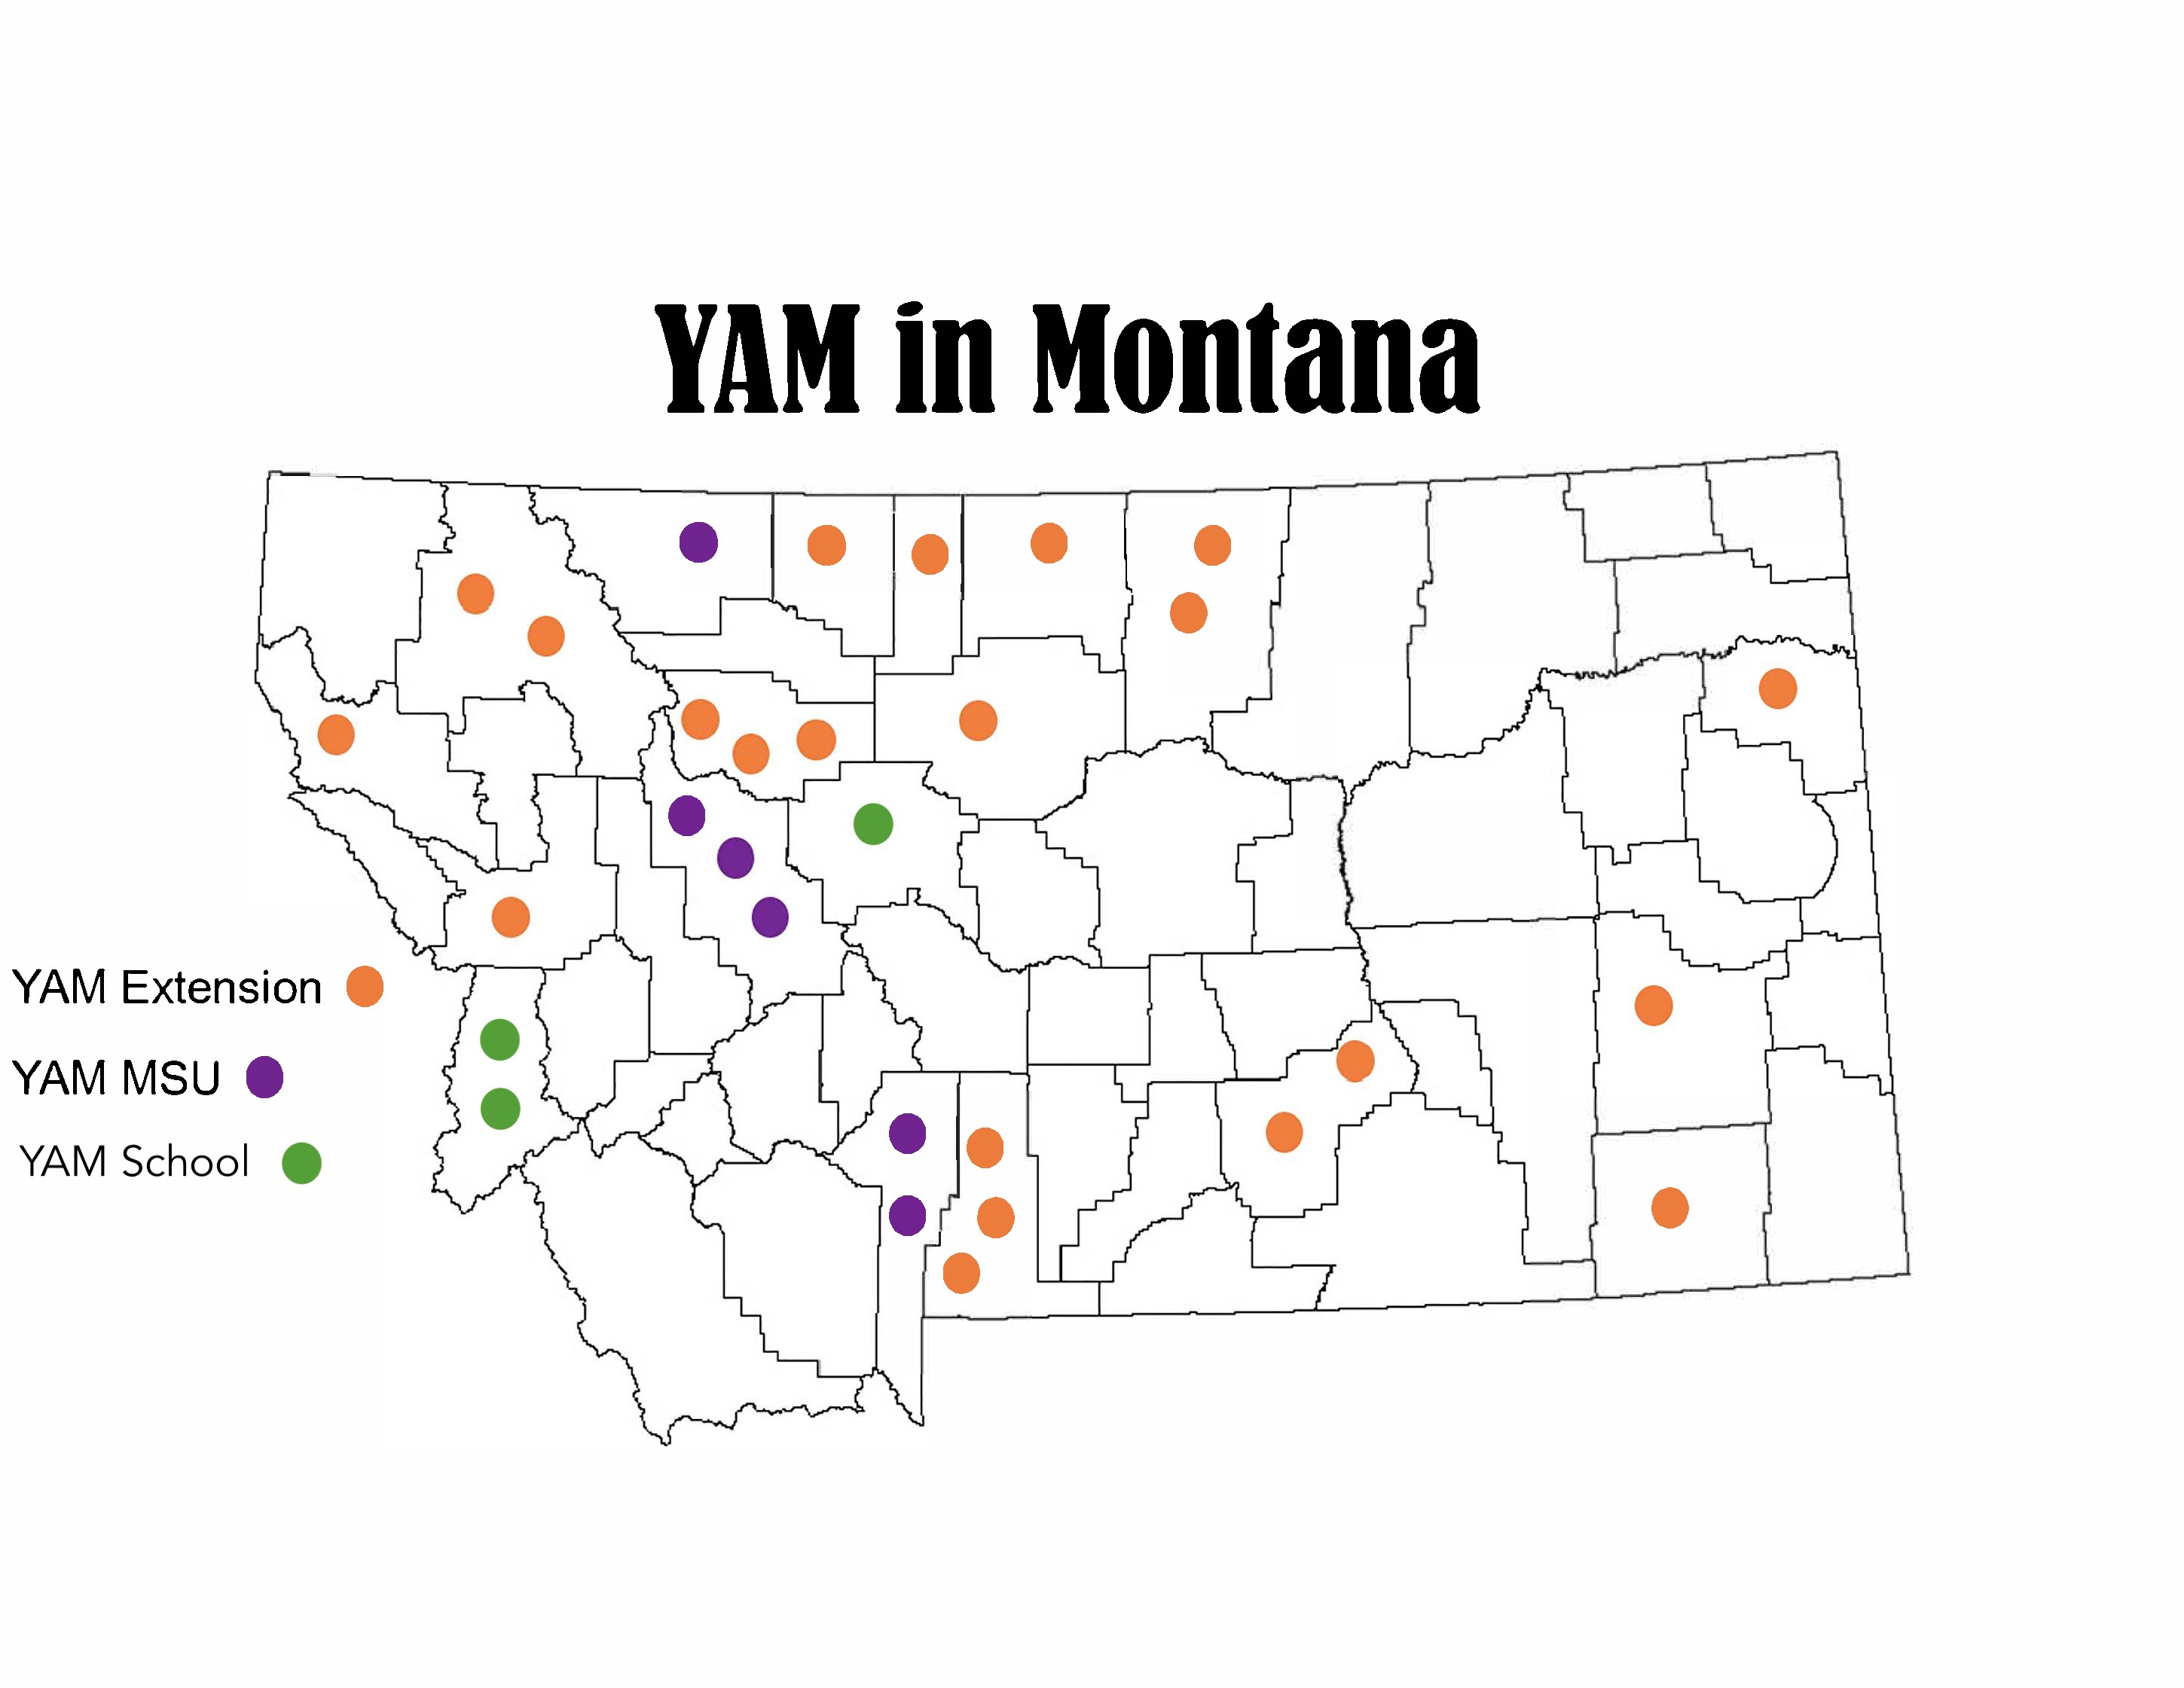 YAM in Montana schools